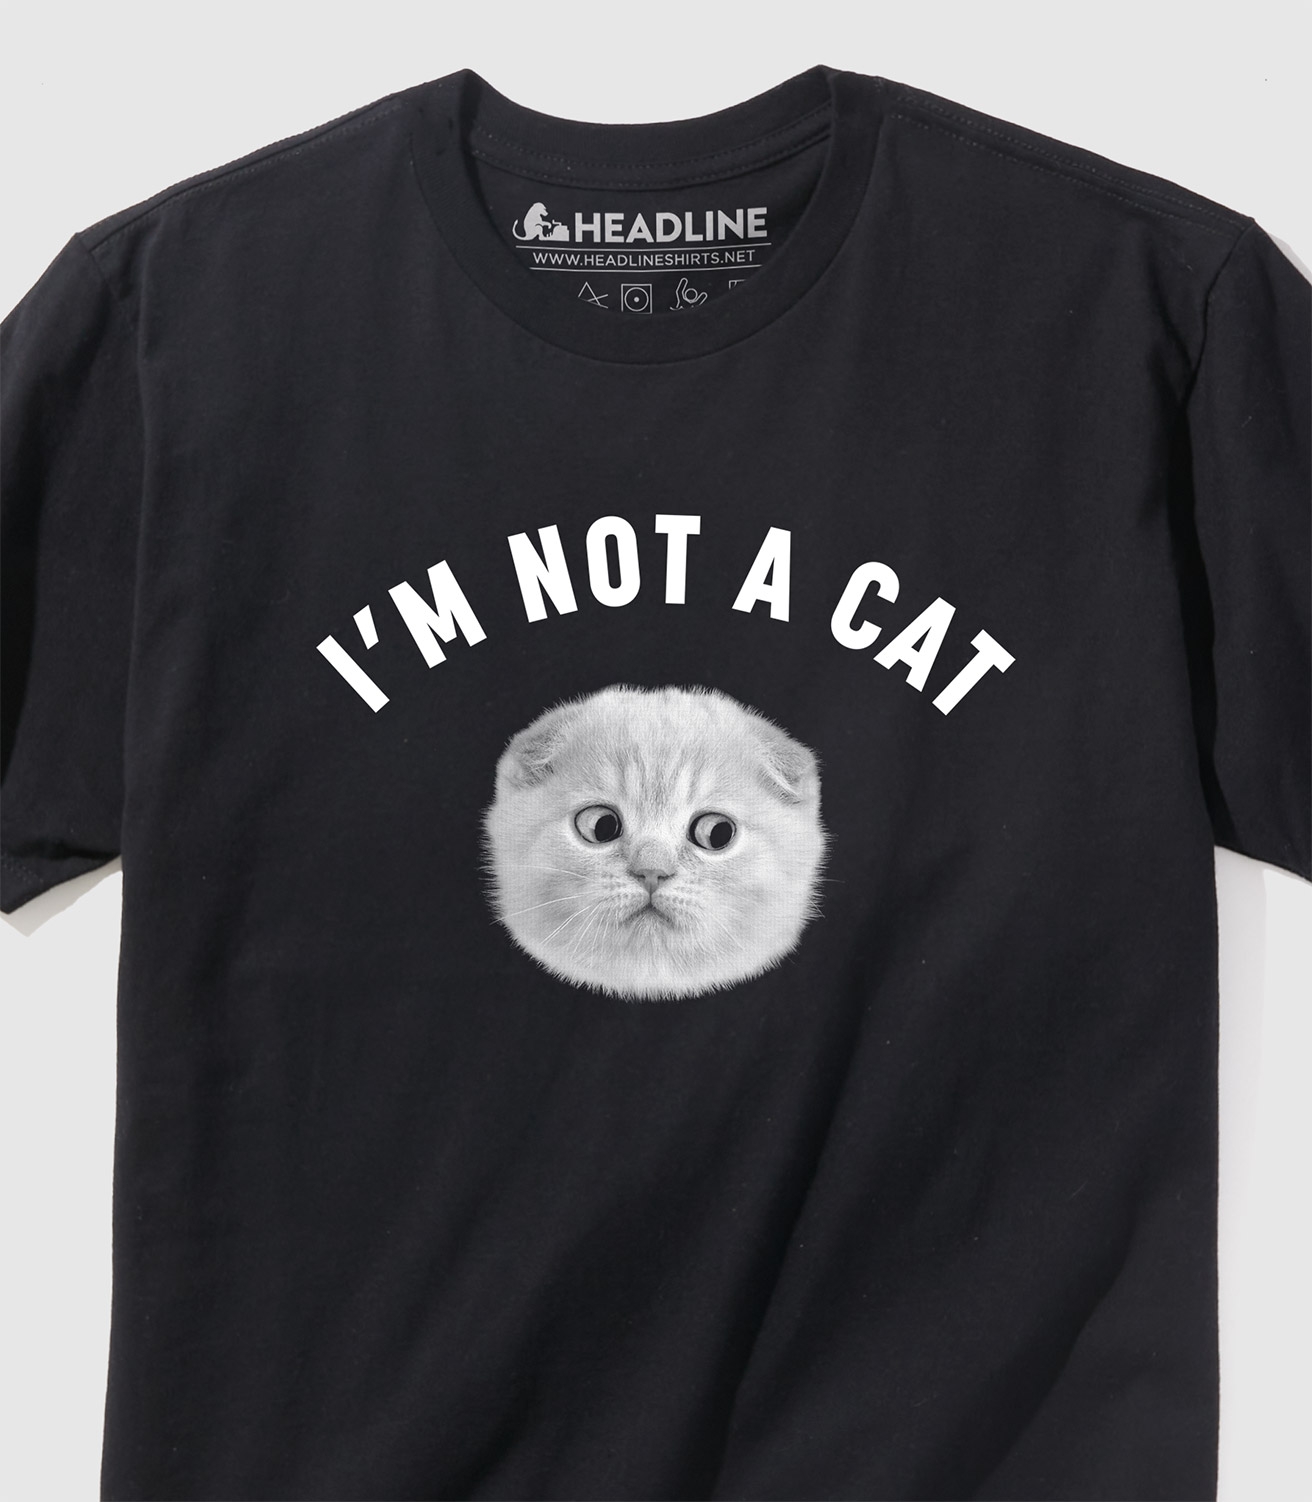 I'm Not A Cat Unisex TShirt Headline Shirts